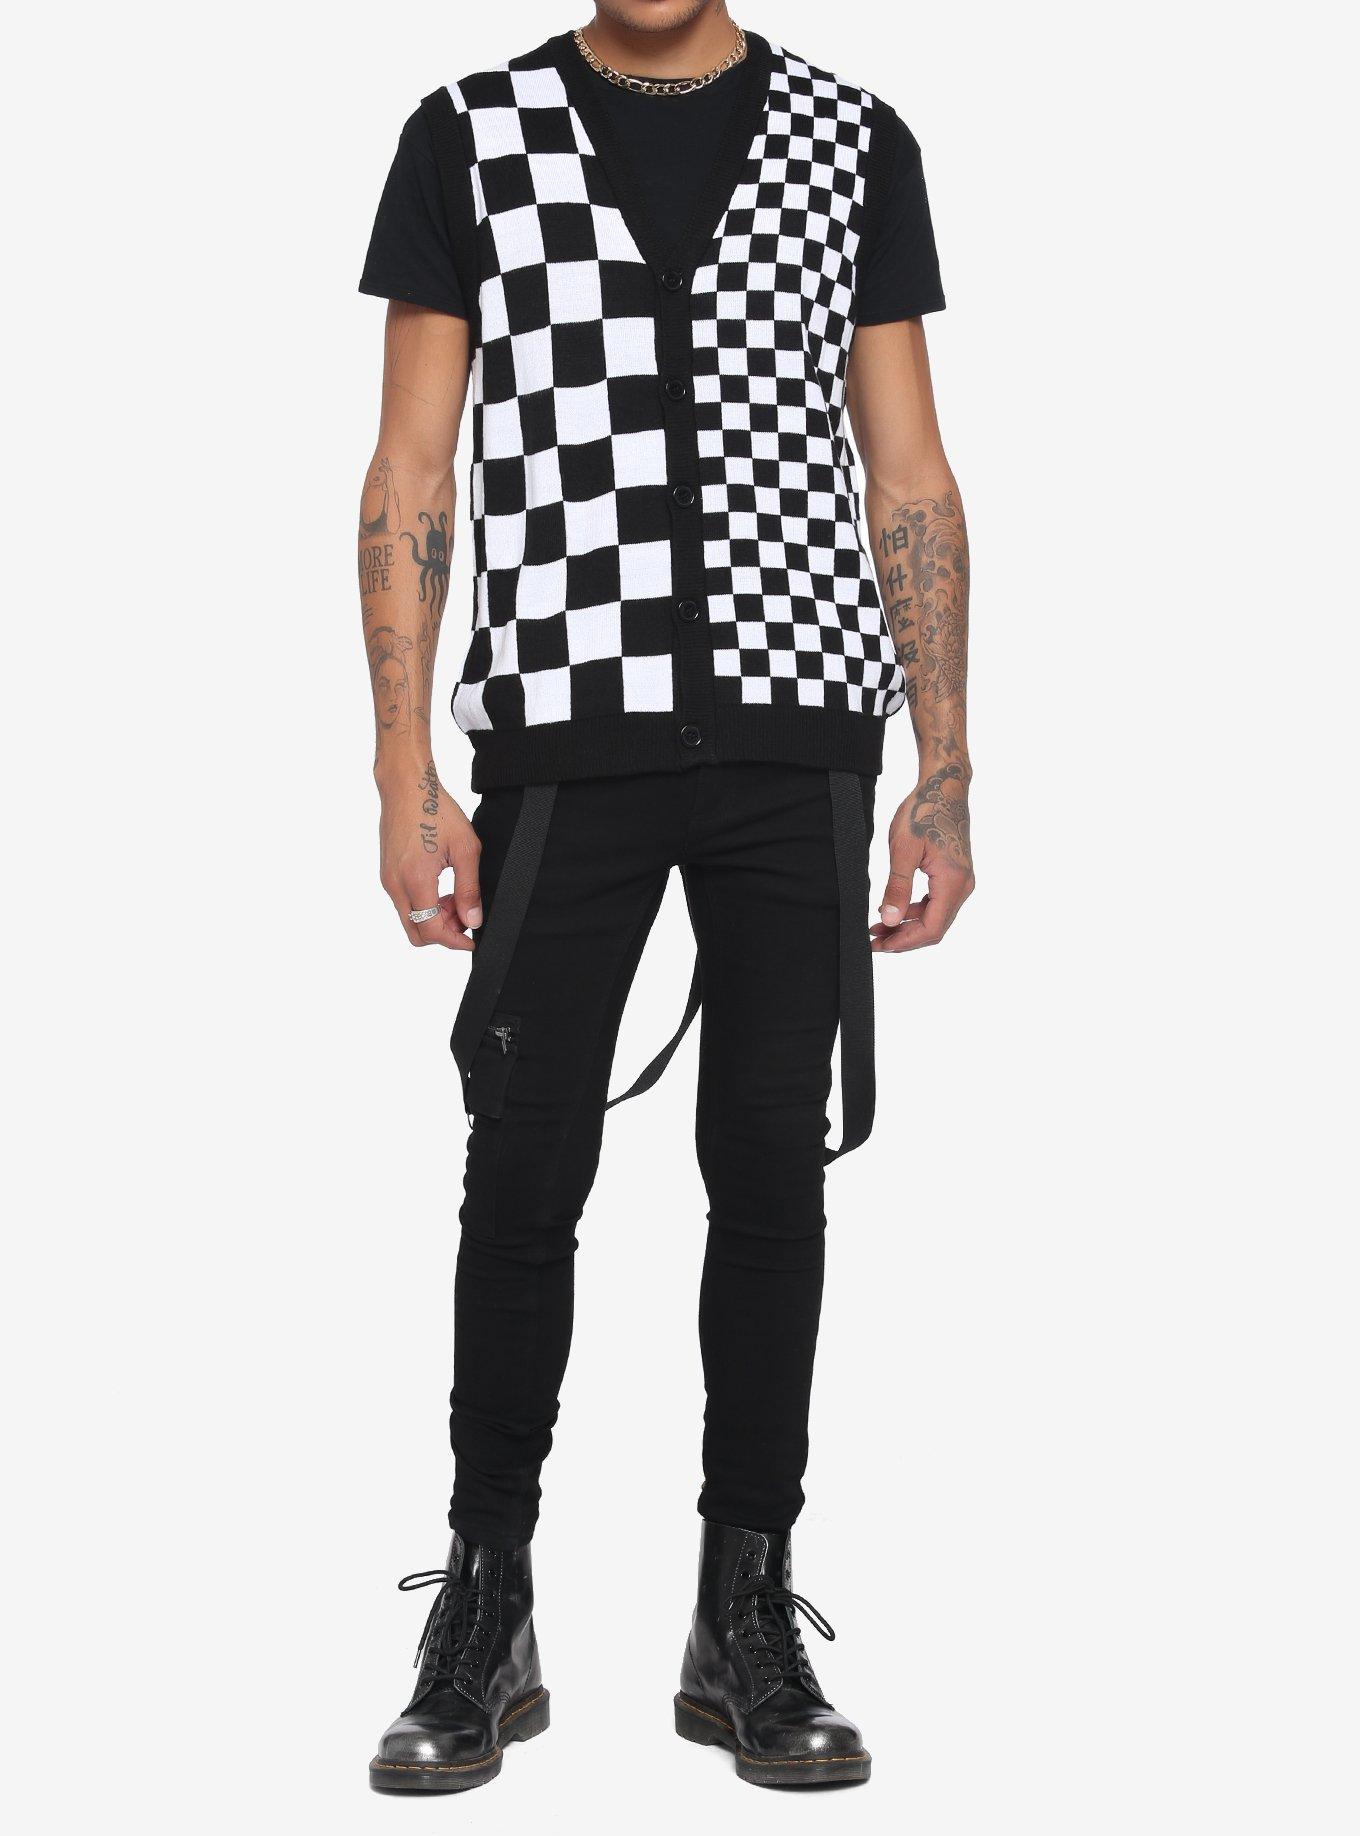 Split Black & White Checkered Knit Vest, CHECKERED, alternate